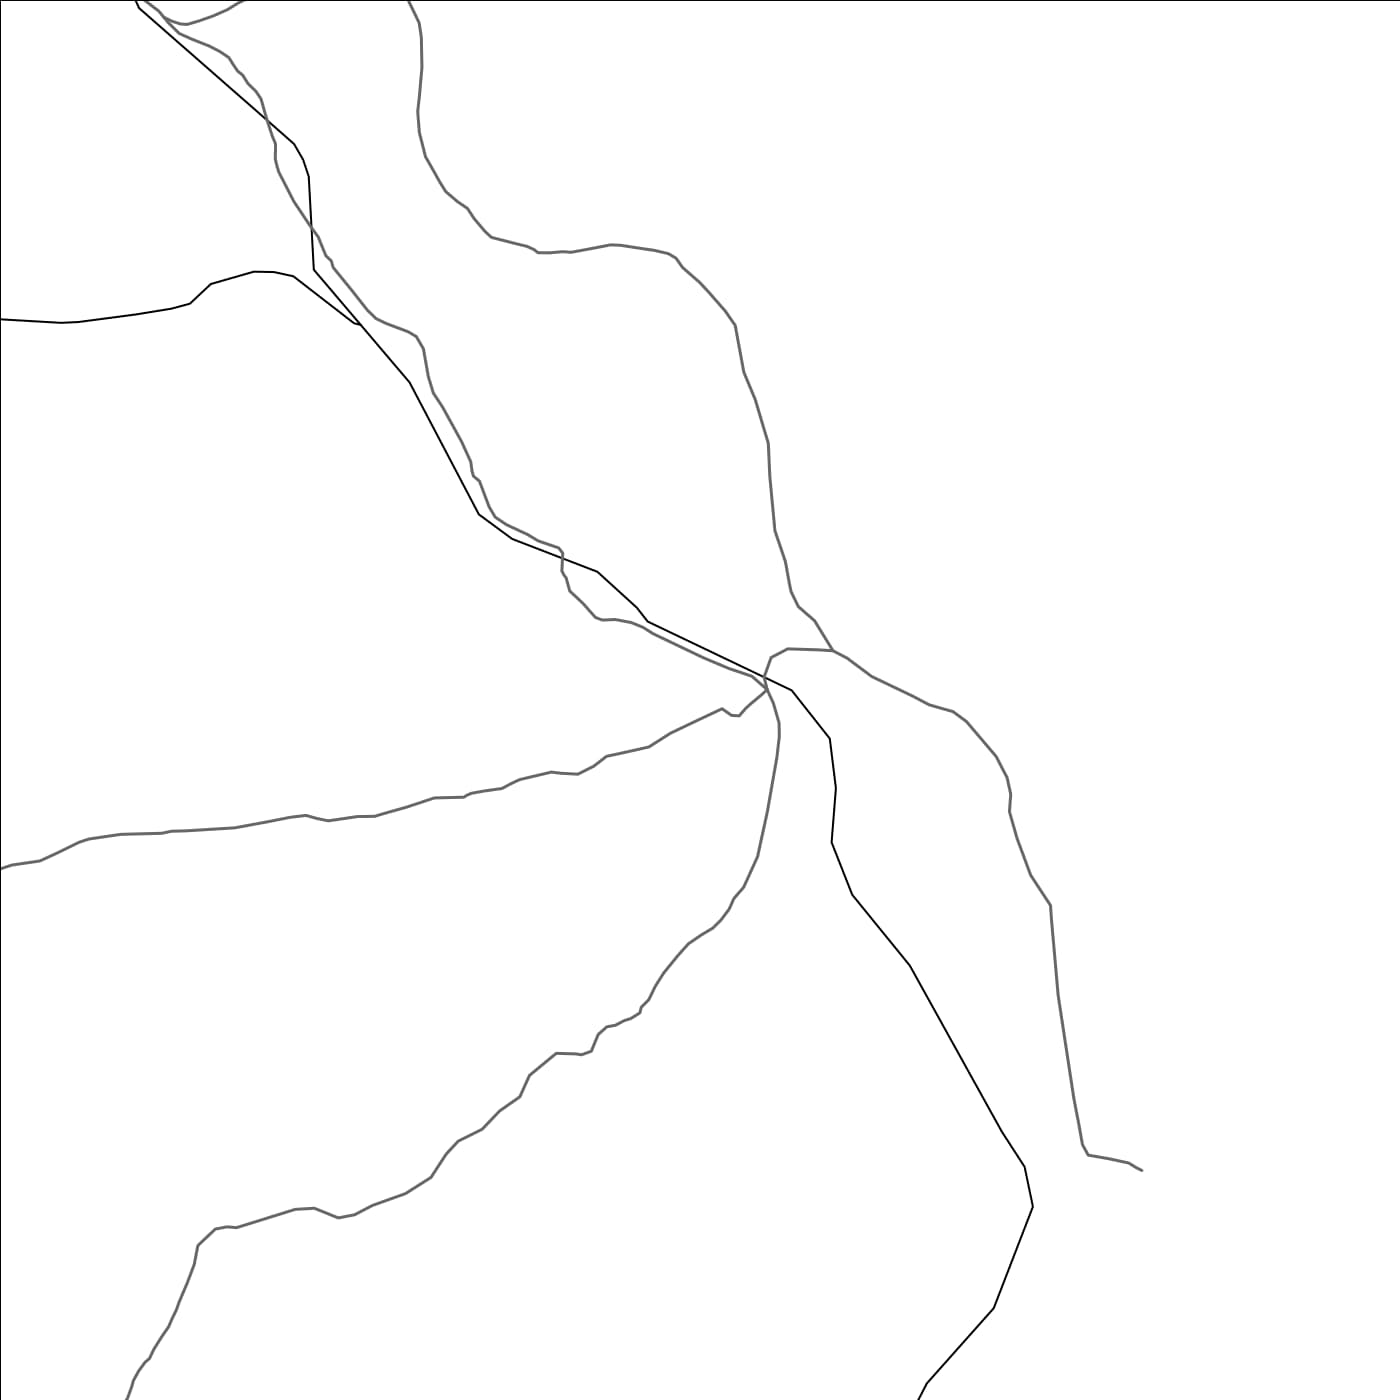 ROAD MAP OF TI-N-ESSAKO, MALI BY MAPBAKES